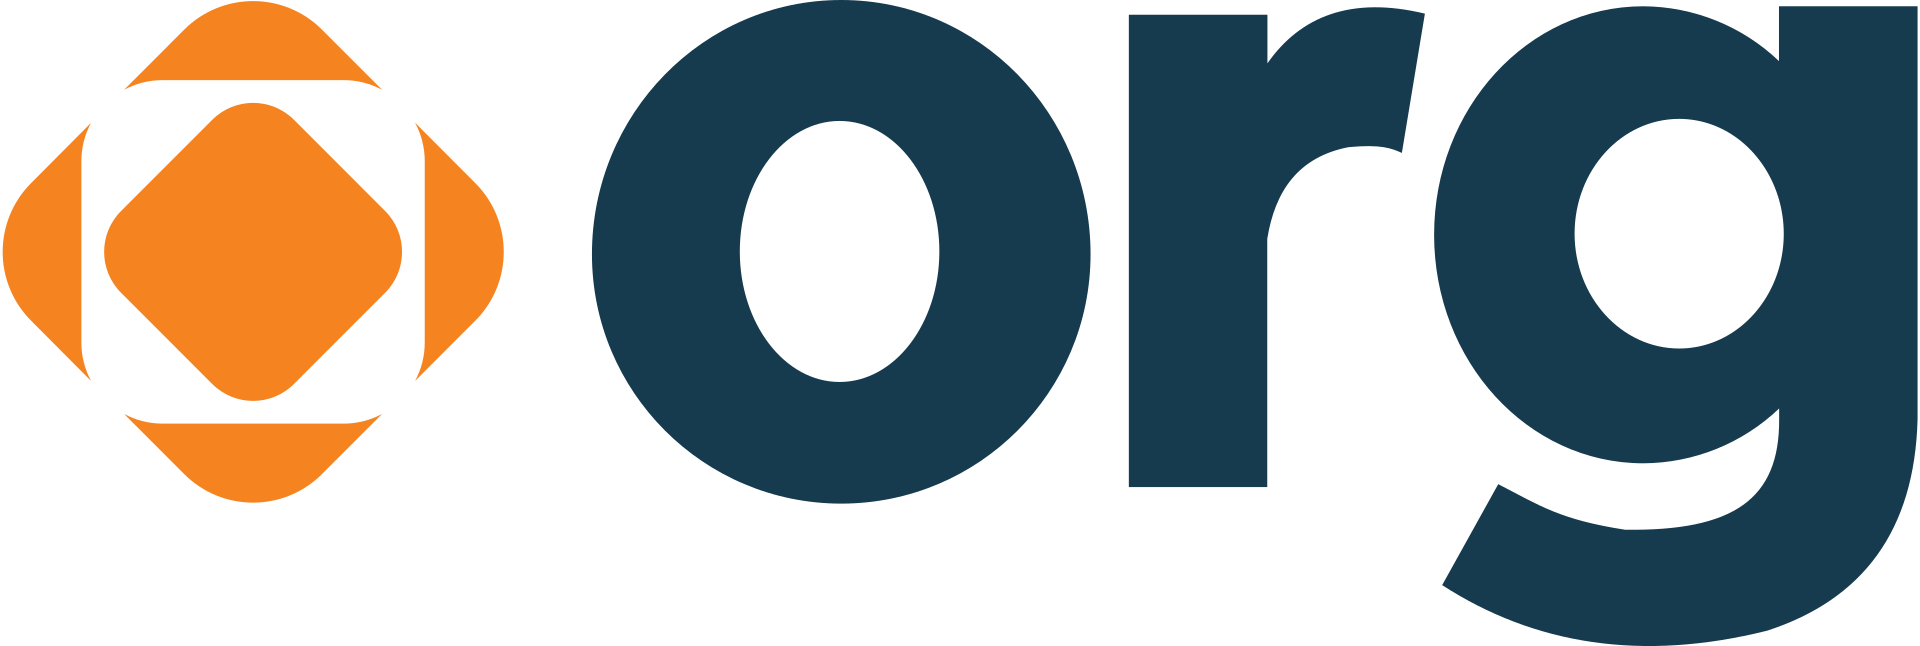 Logos org. Домен org. .Org. Org logo. .Org domain.